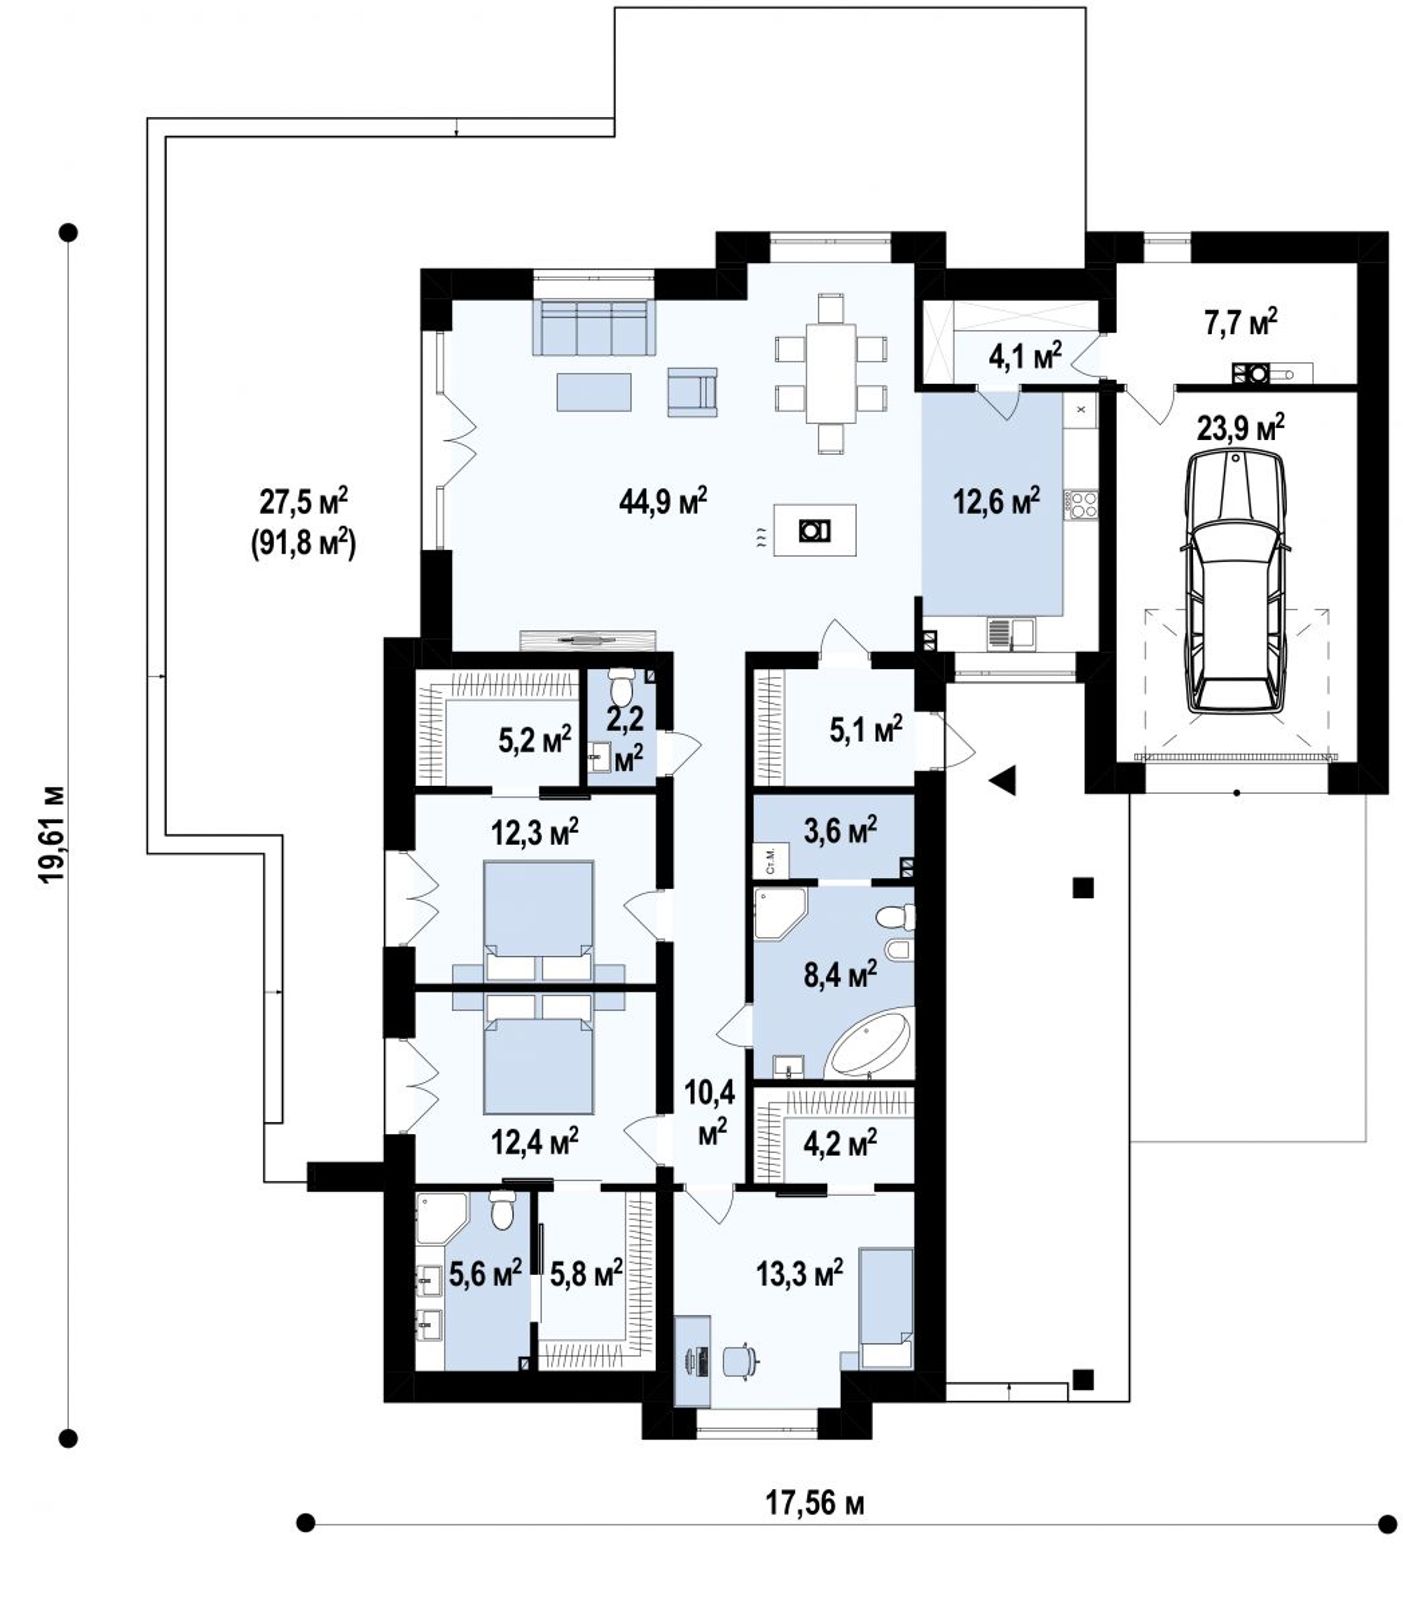 1-ый этаж - план проекта Zx96